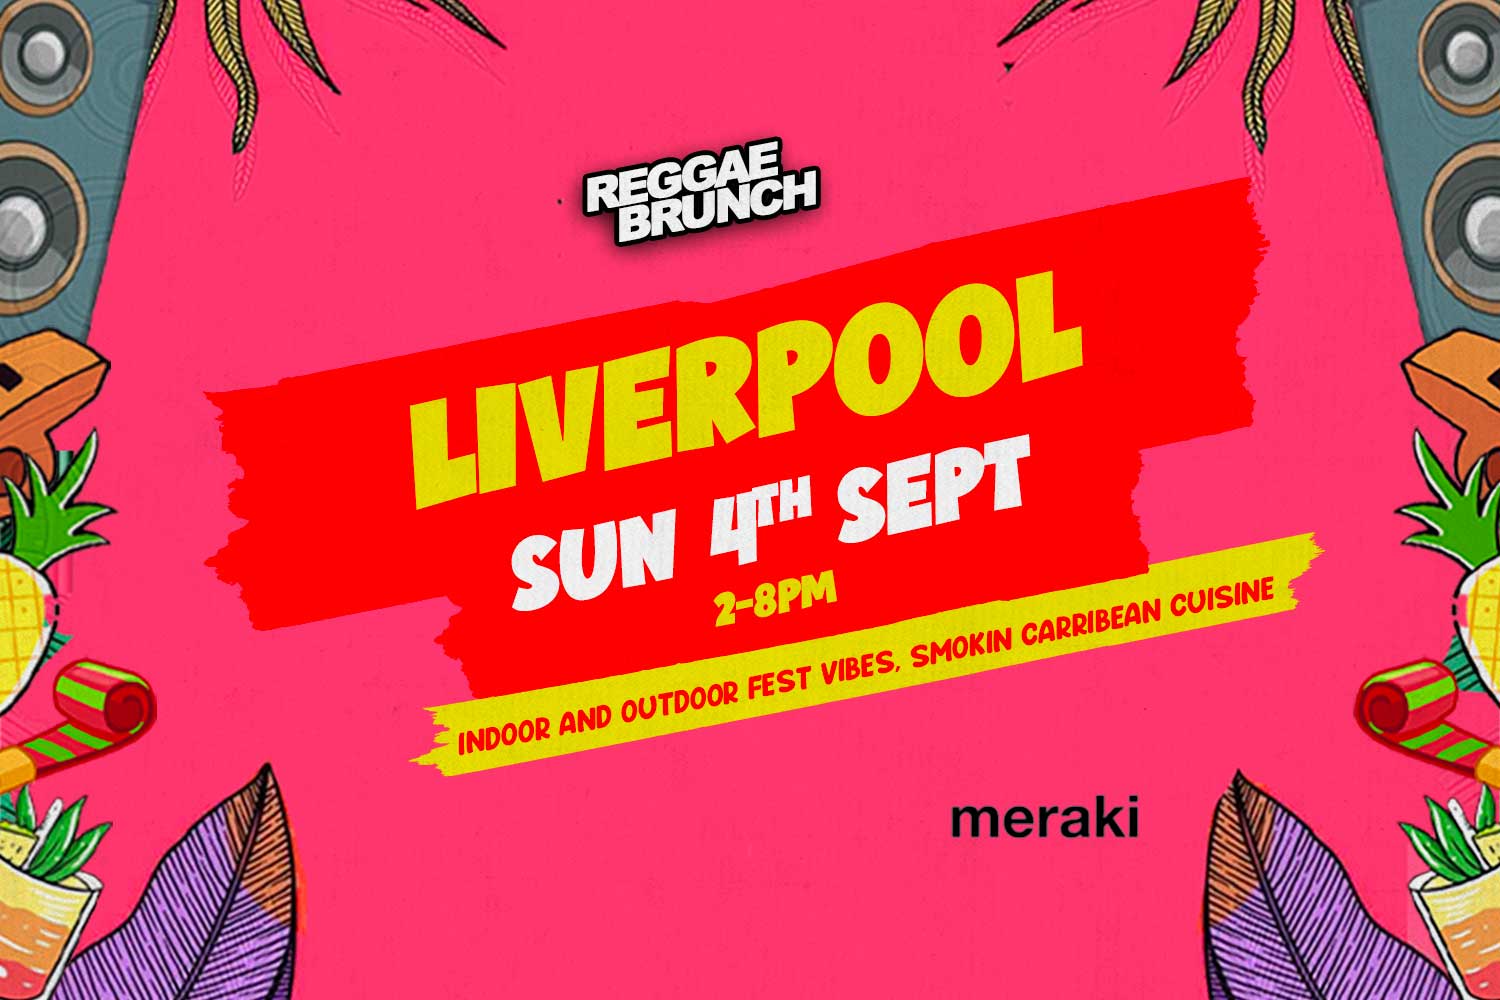 Sun, 4th Sept 2022 Liverpool